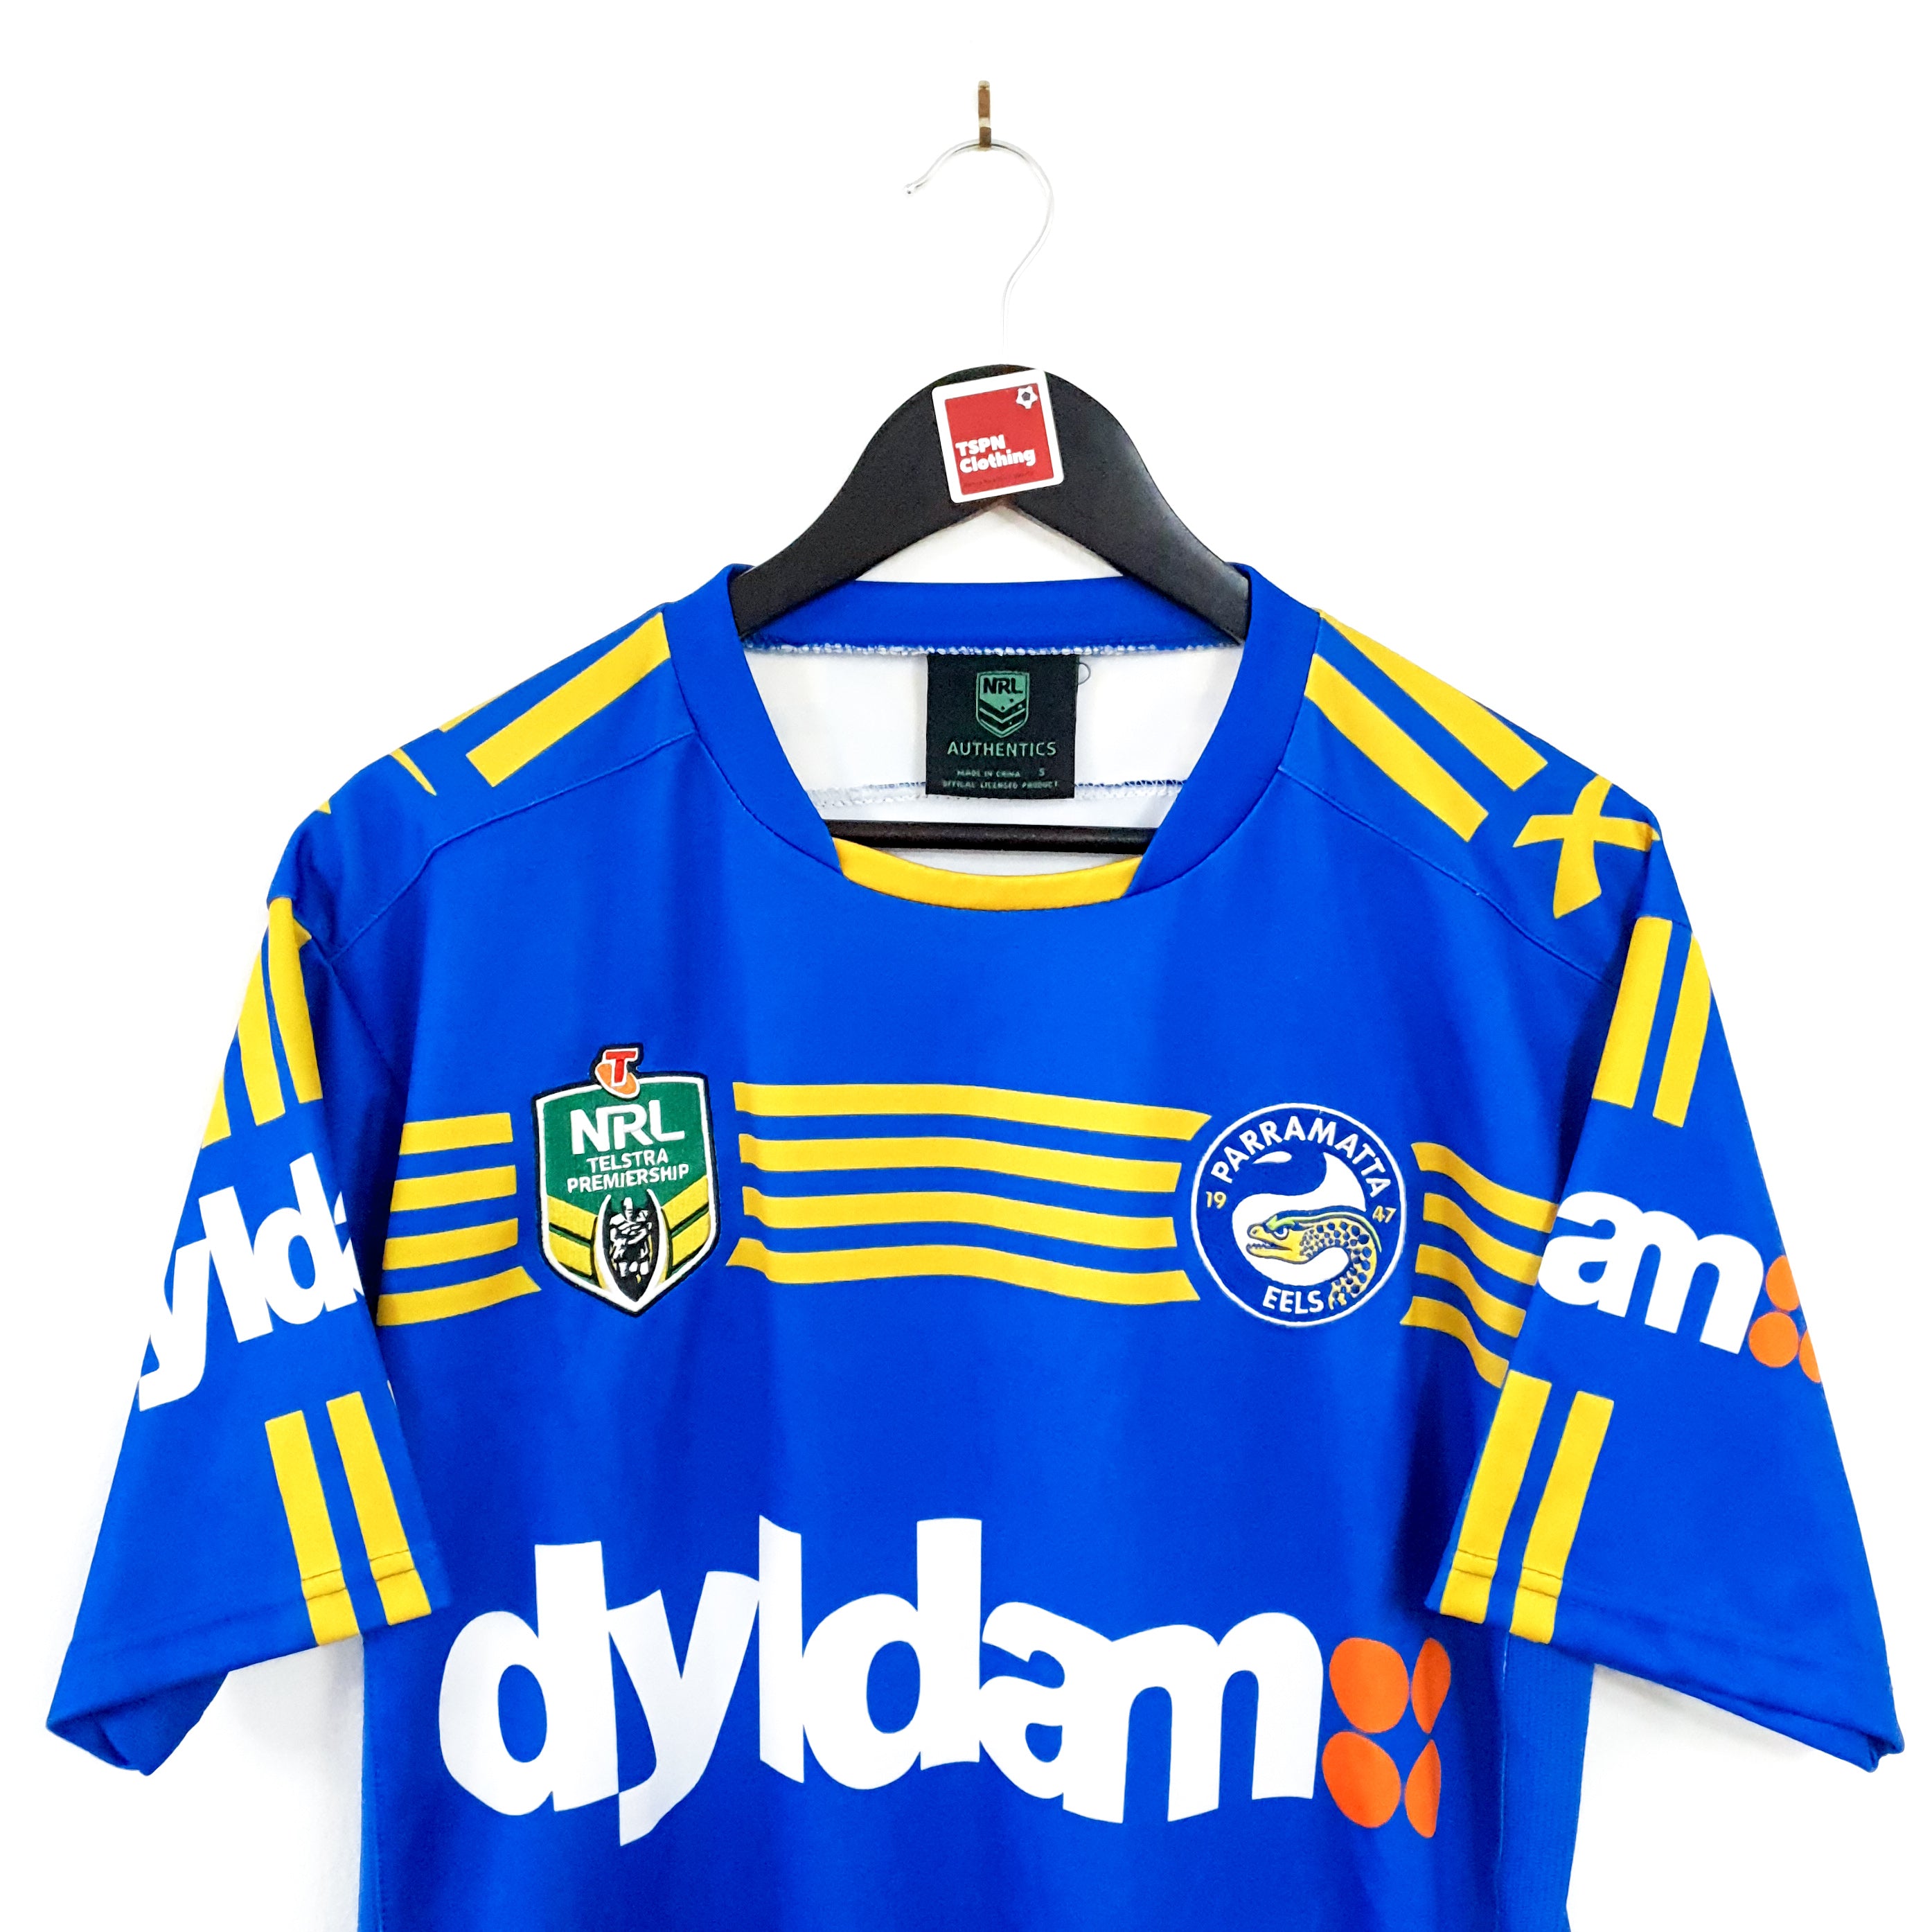 Parramatta Eels home rugby shirt 2014 - TSPN Calcio